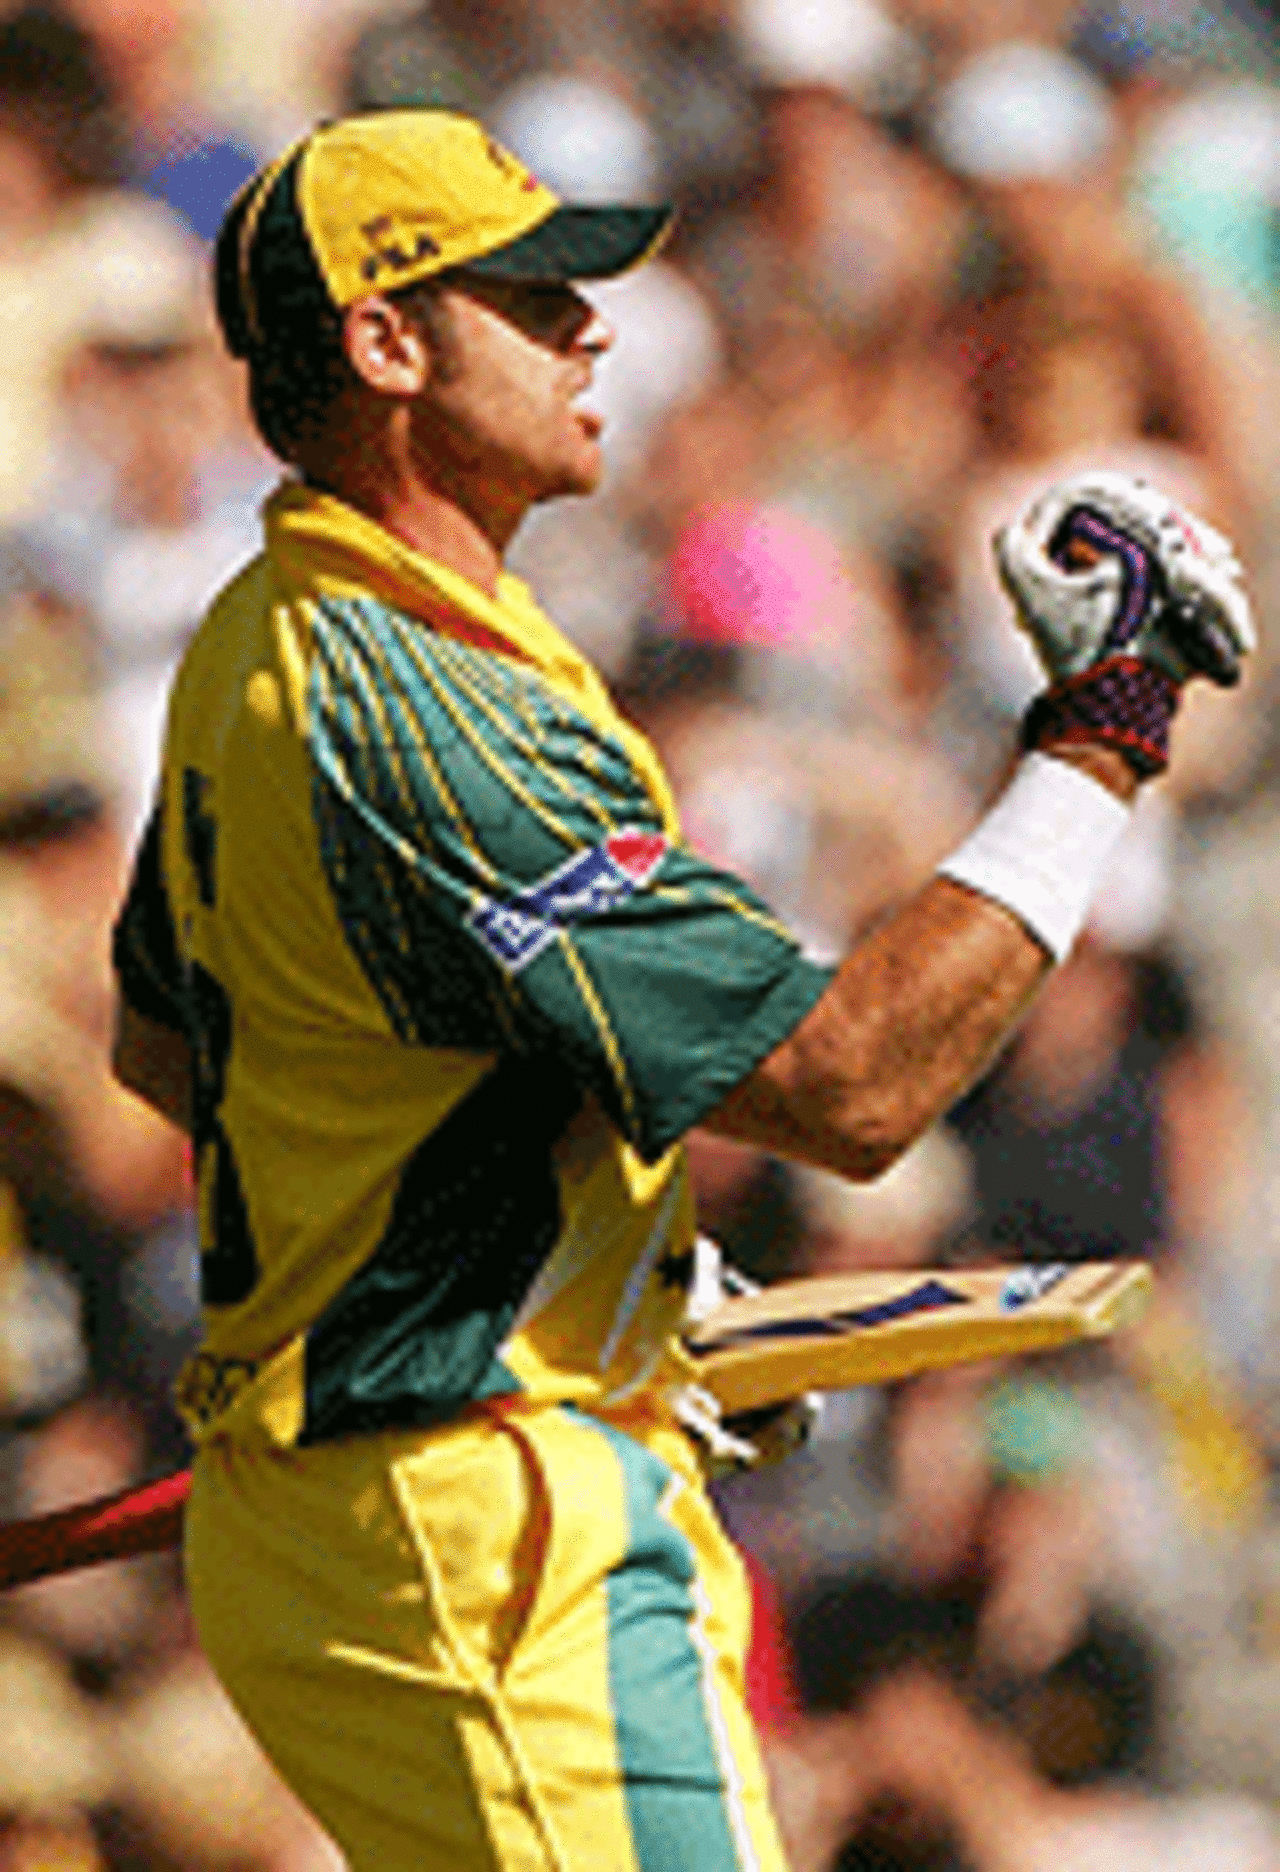 Matthew Hayden celebrates after reaching his hundred, New Zealand v Australia, 2nd ODI, Christchurch, February 22, 2005